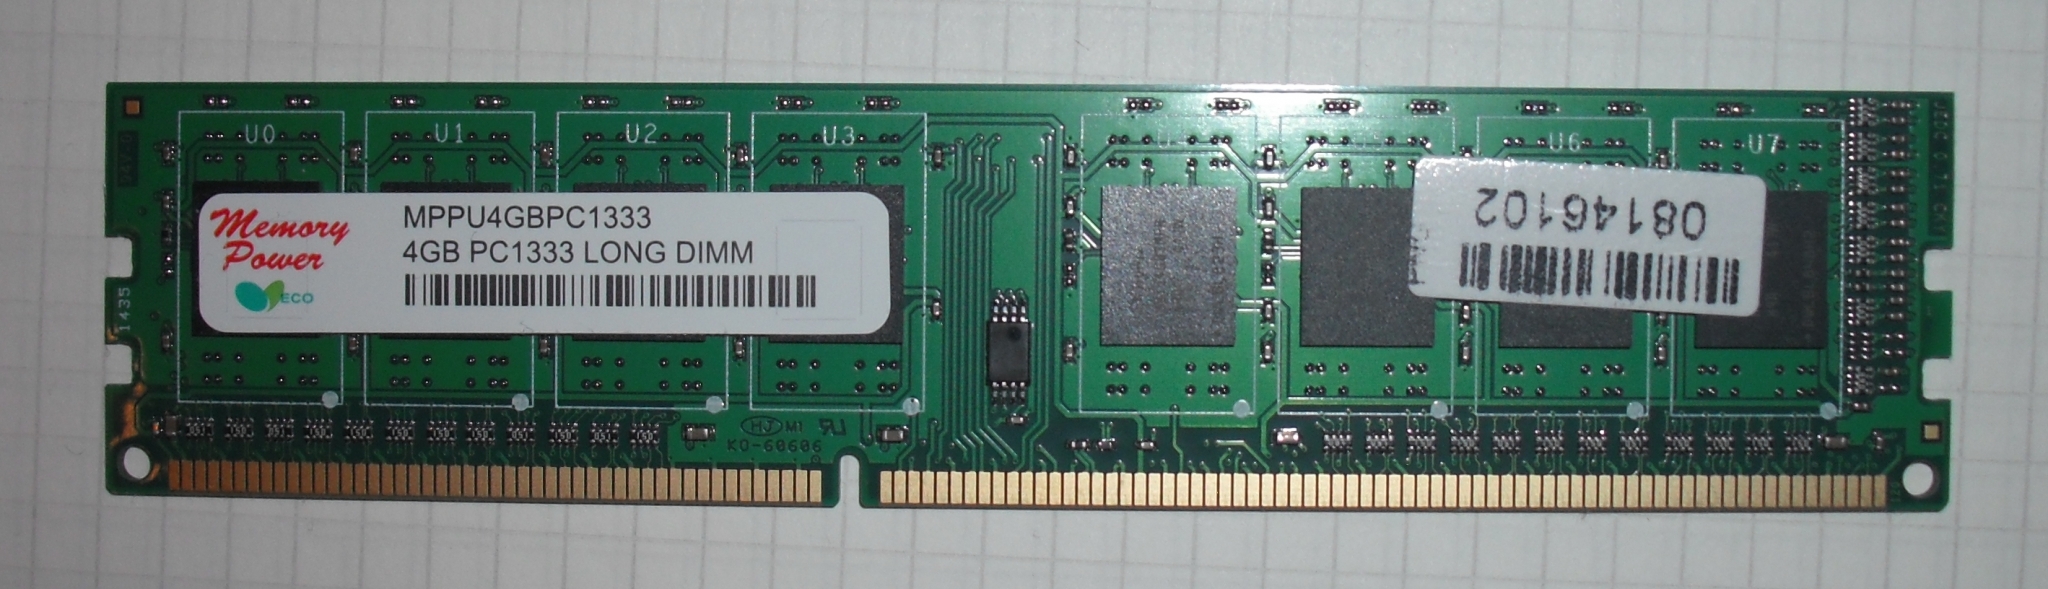 Частота памяти 1333. Оперативная память Memory Power 4gb pc1333. Hynix ddr3 4gb pc1333. Оперативную память Hynix 4 GB ddr3 1333 MHZ. Hynix ddr3 PC 1333 DIMM 4gb.